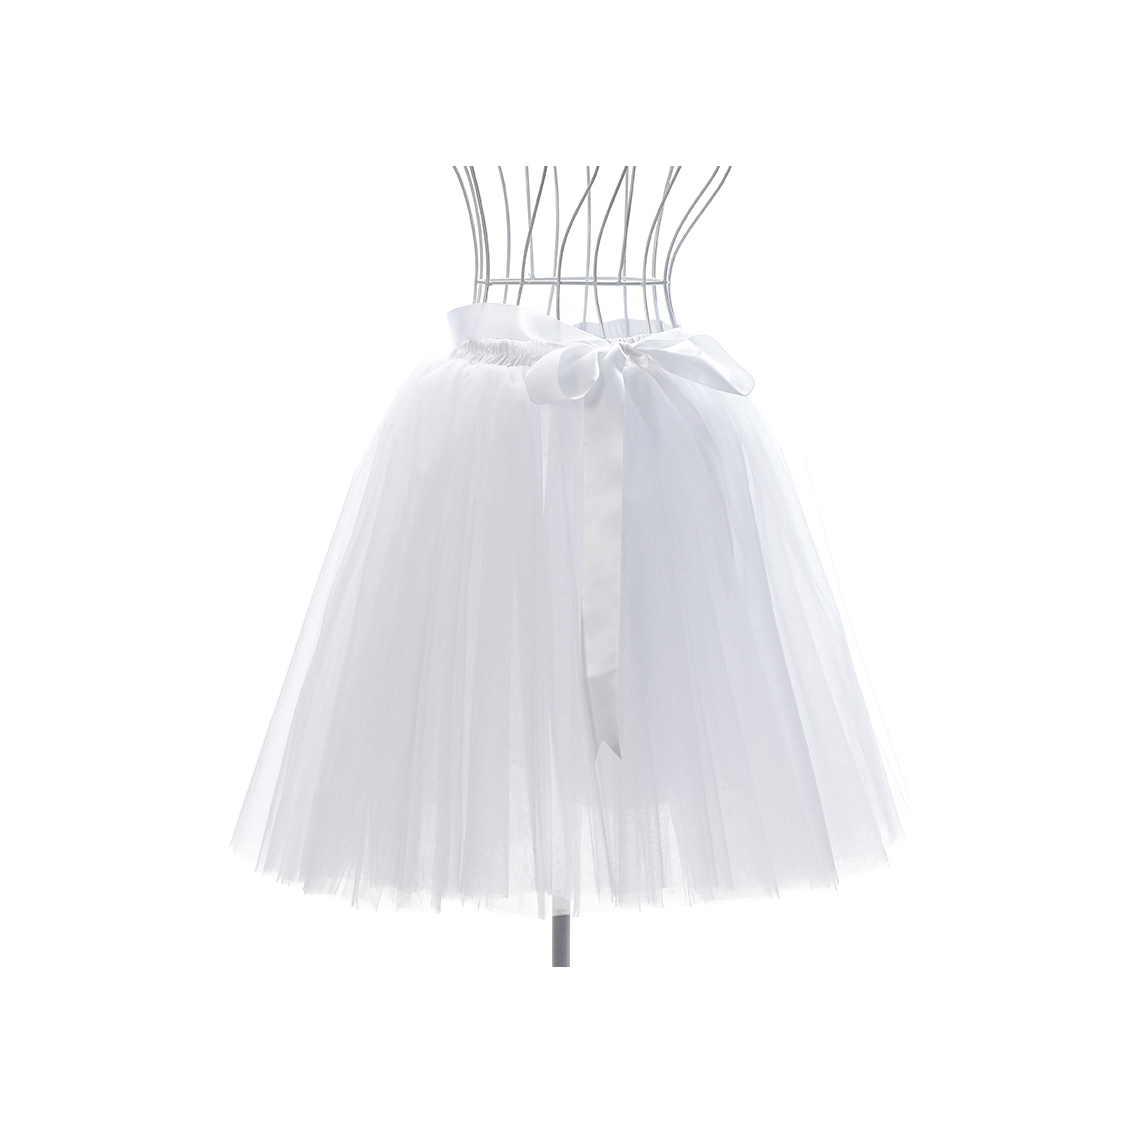 6 Layers Tulle Midi Lolita Skirt Women Adult Tutu Skirt American Apparel Wedding Bridesmaid Party Petticoat white